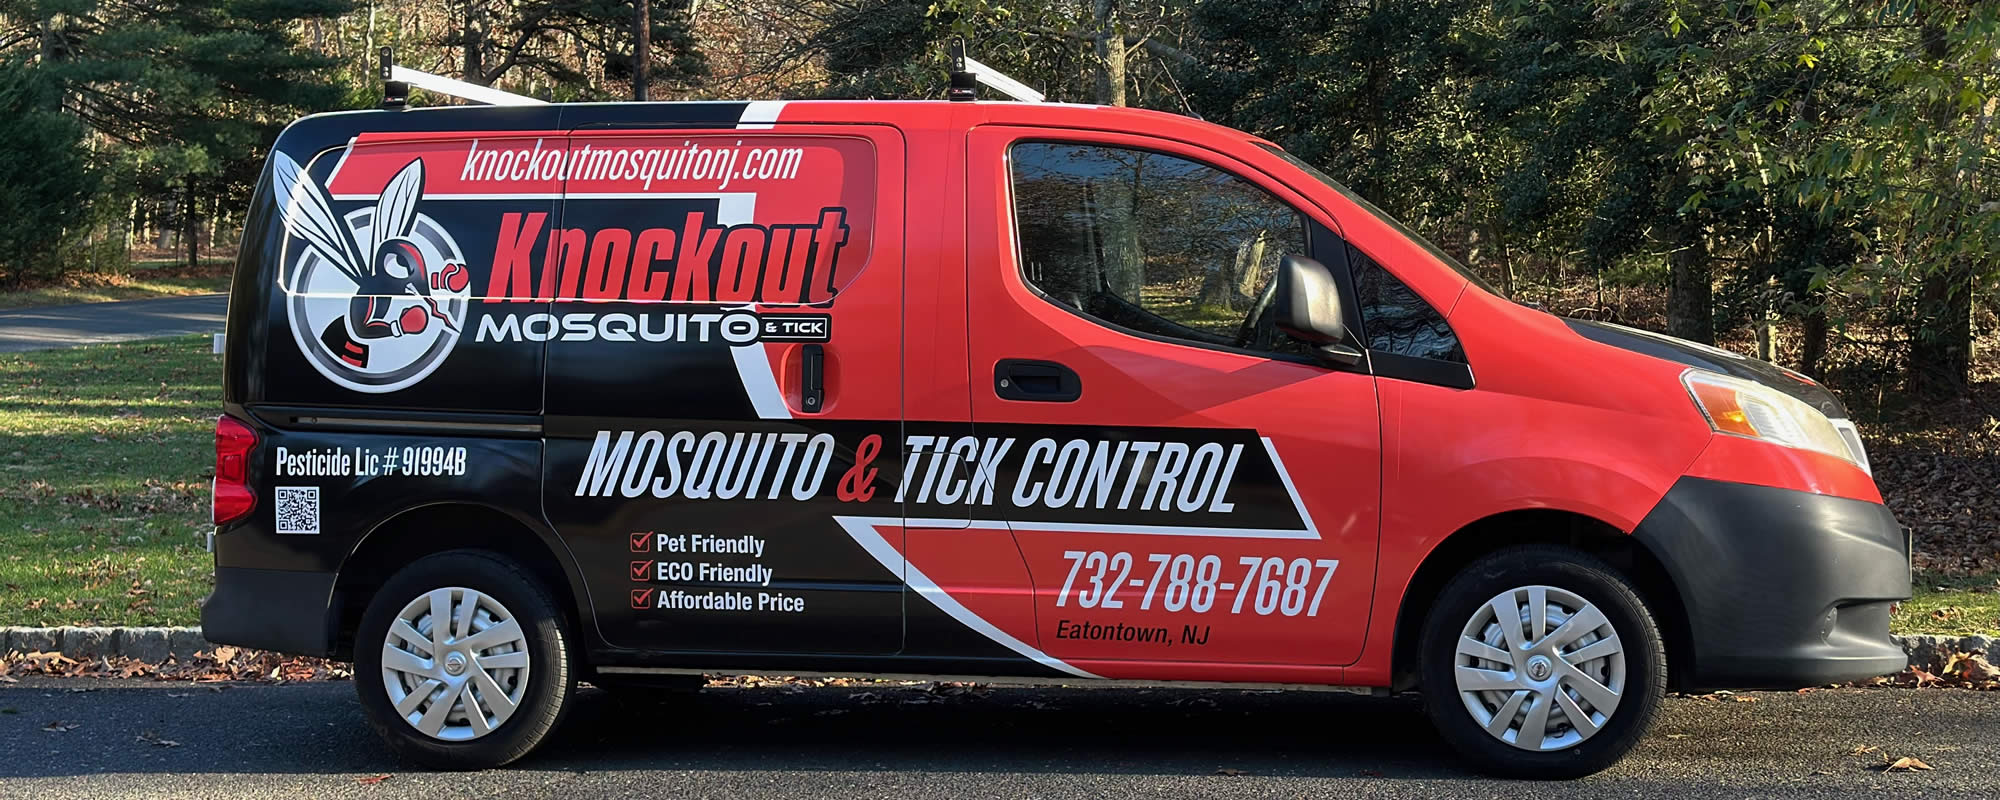 Manasquan Mosquito Control Services